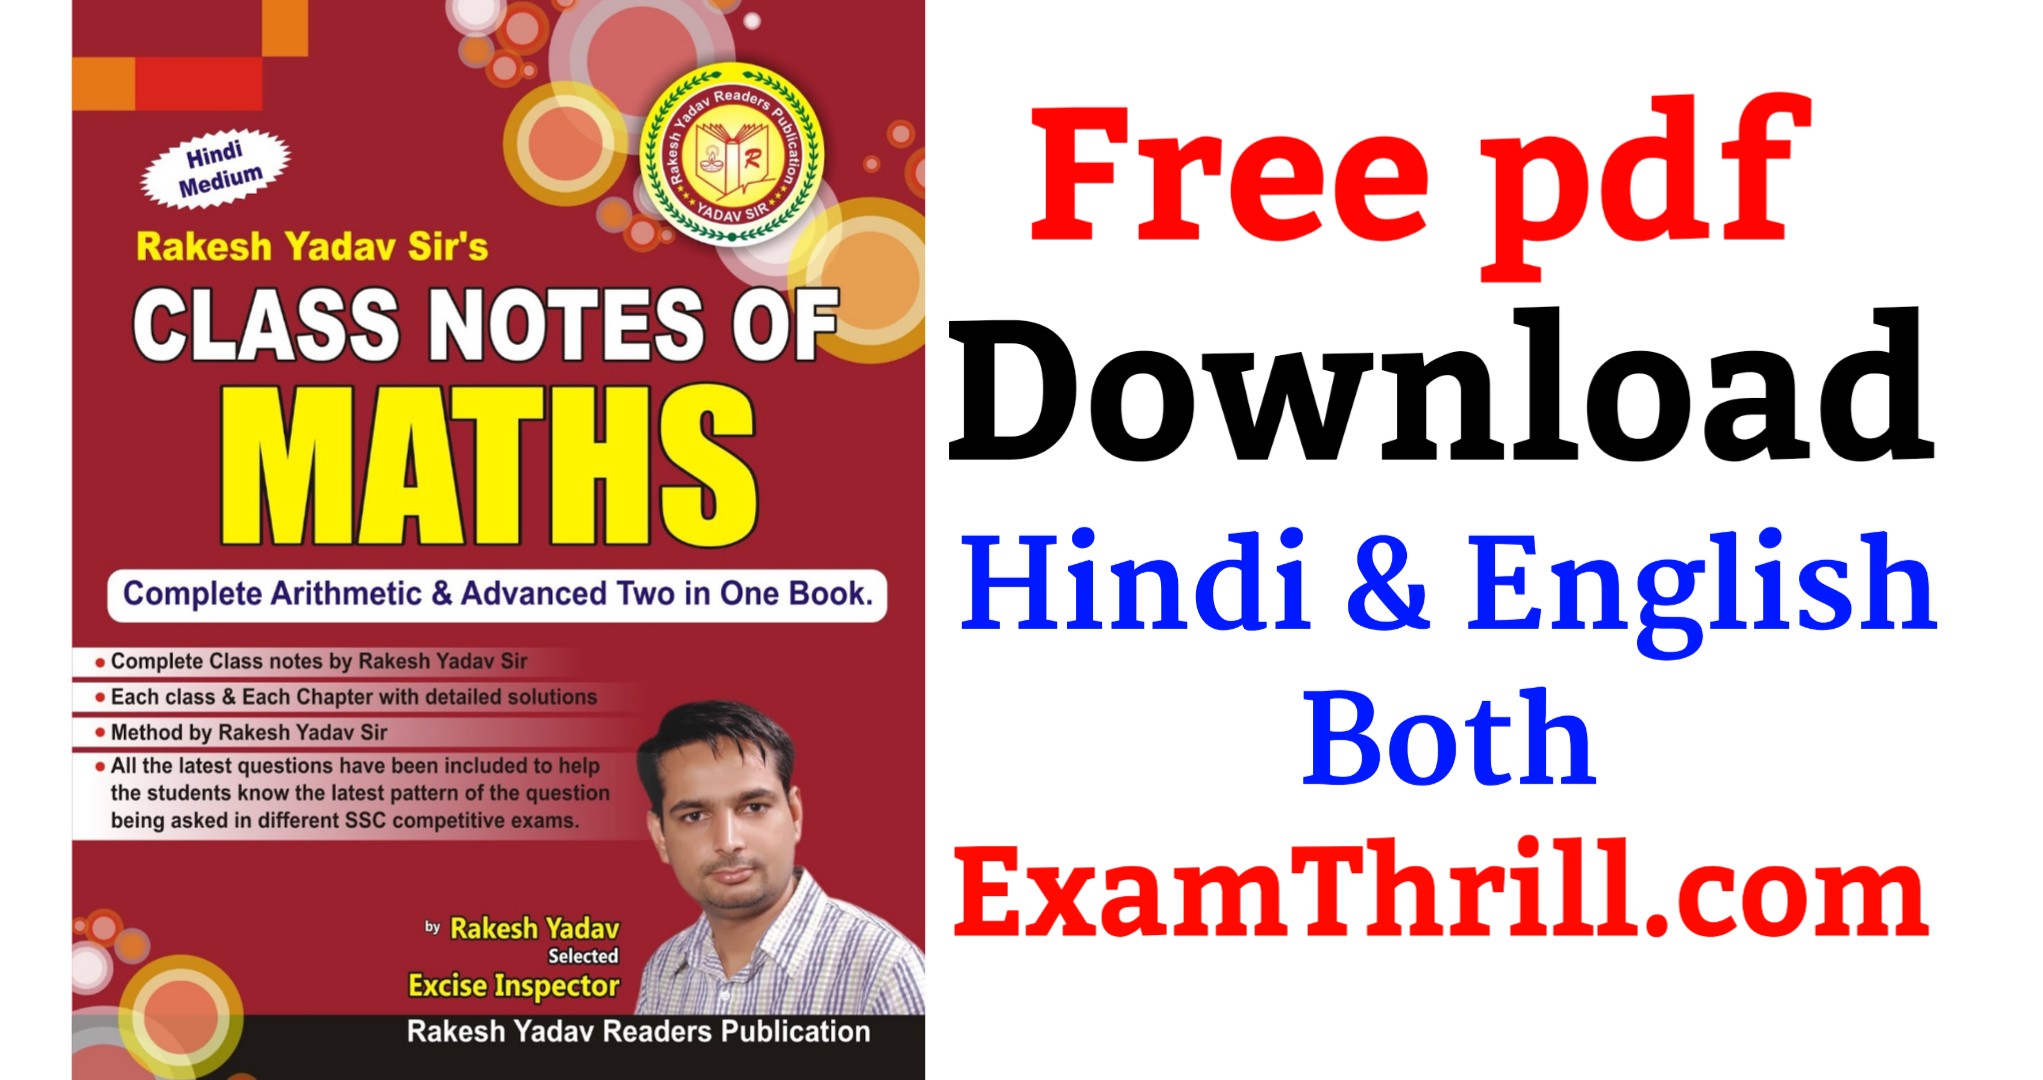 Rakesh yadav class notes pdf free